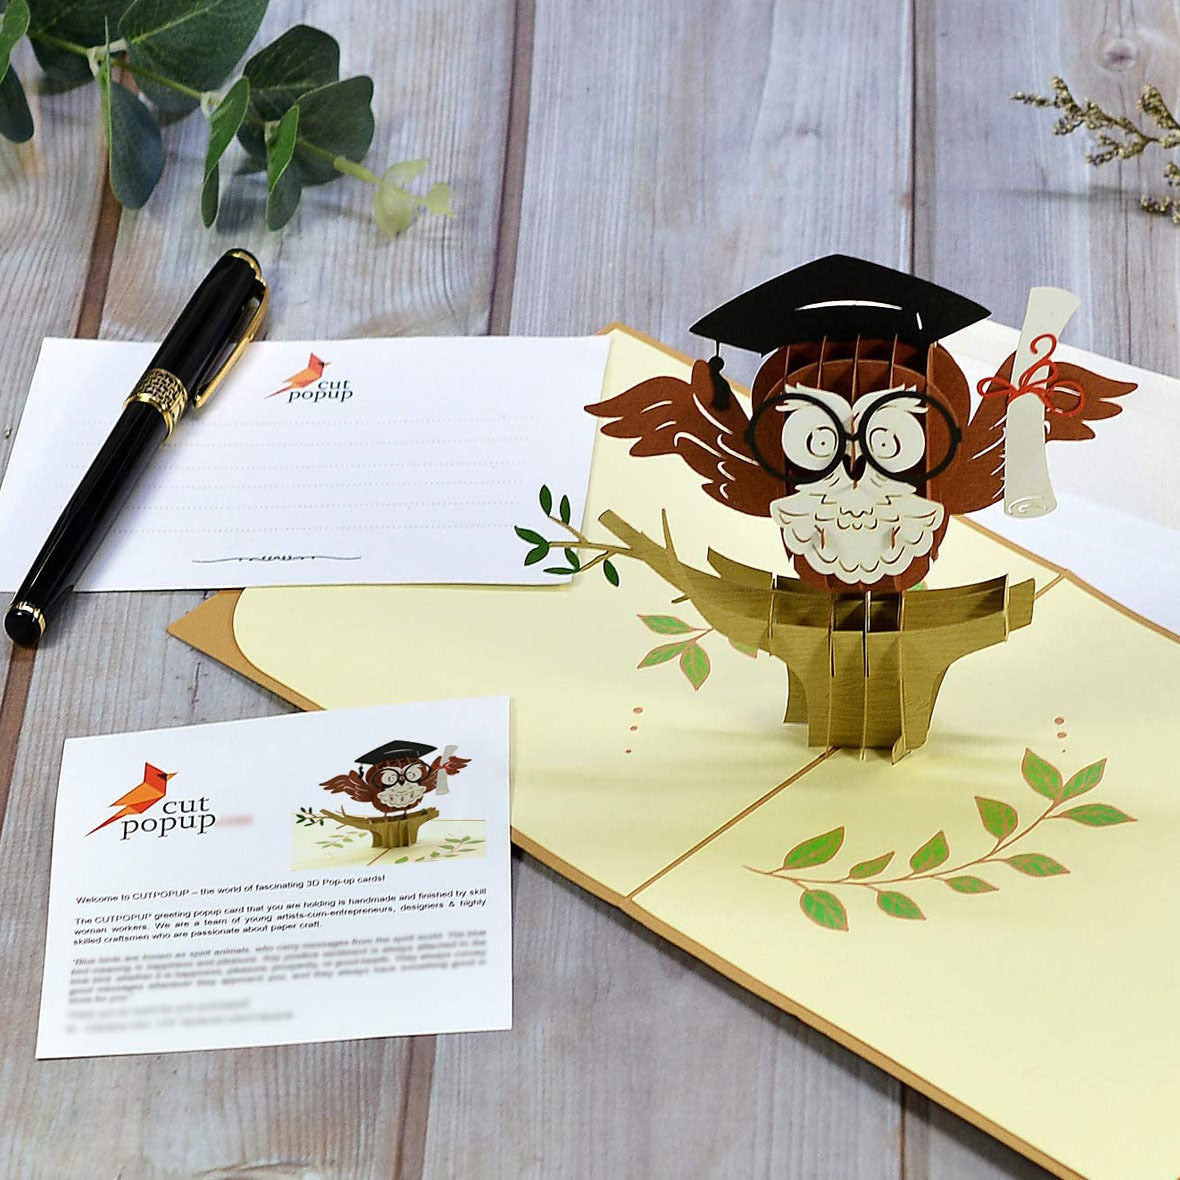 Graduation Owl Pop Up Card